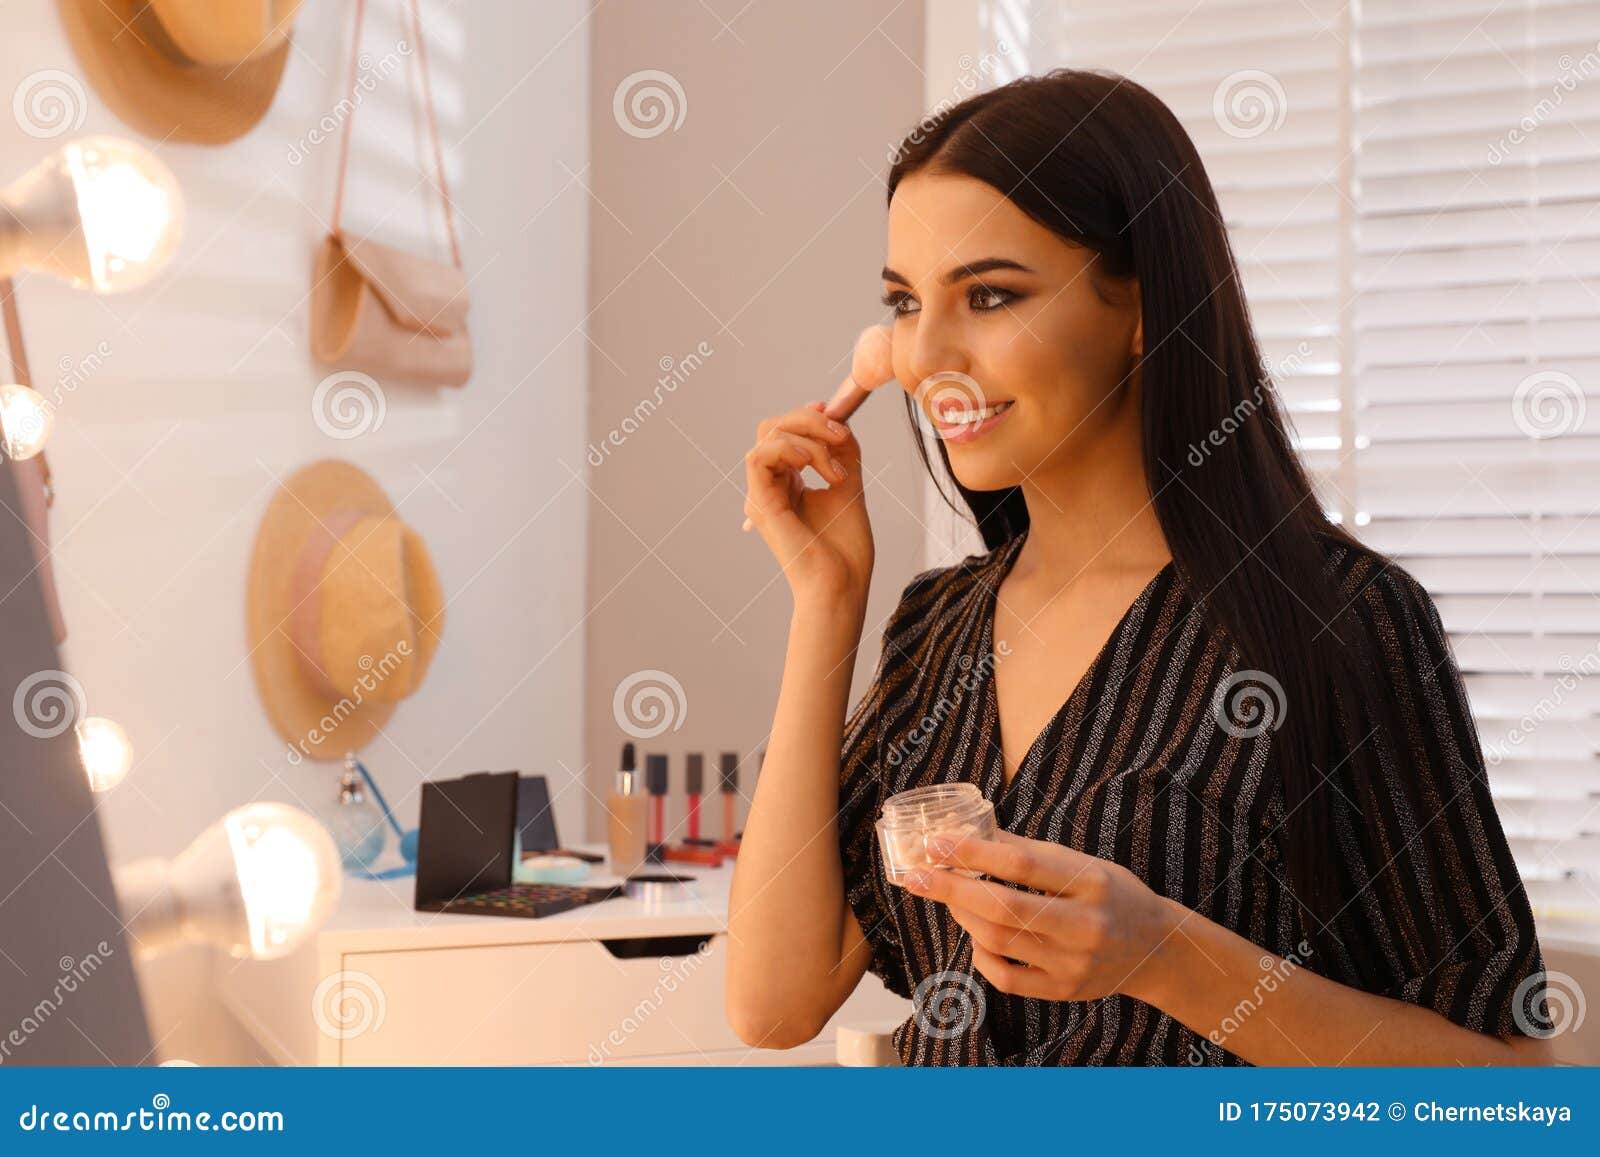 Beautiful Young Woman Applying Makeup Near Mirror In Room ...